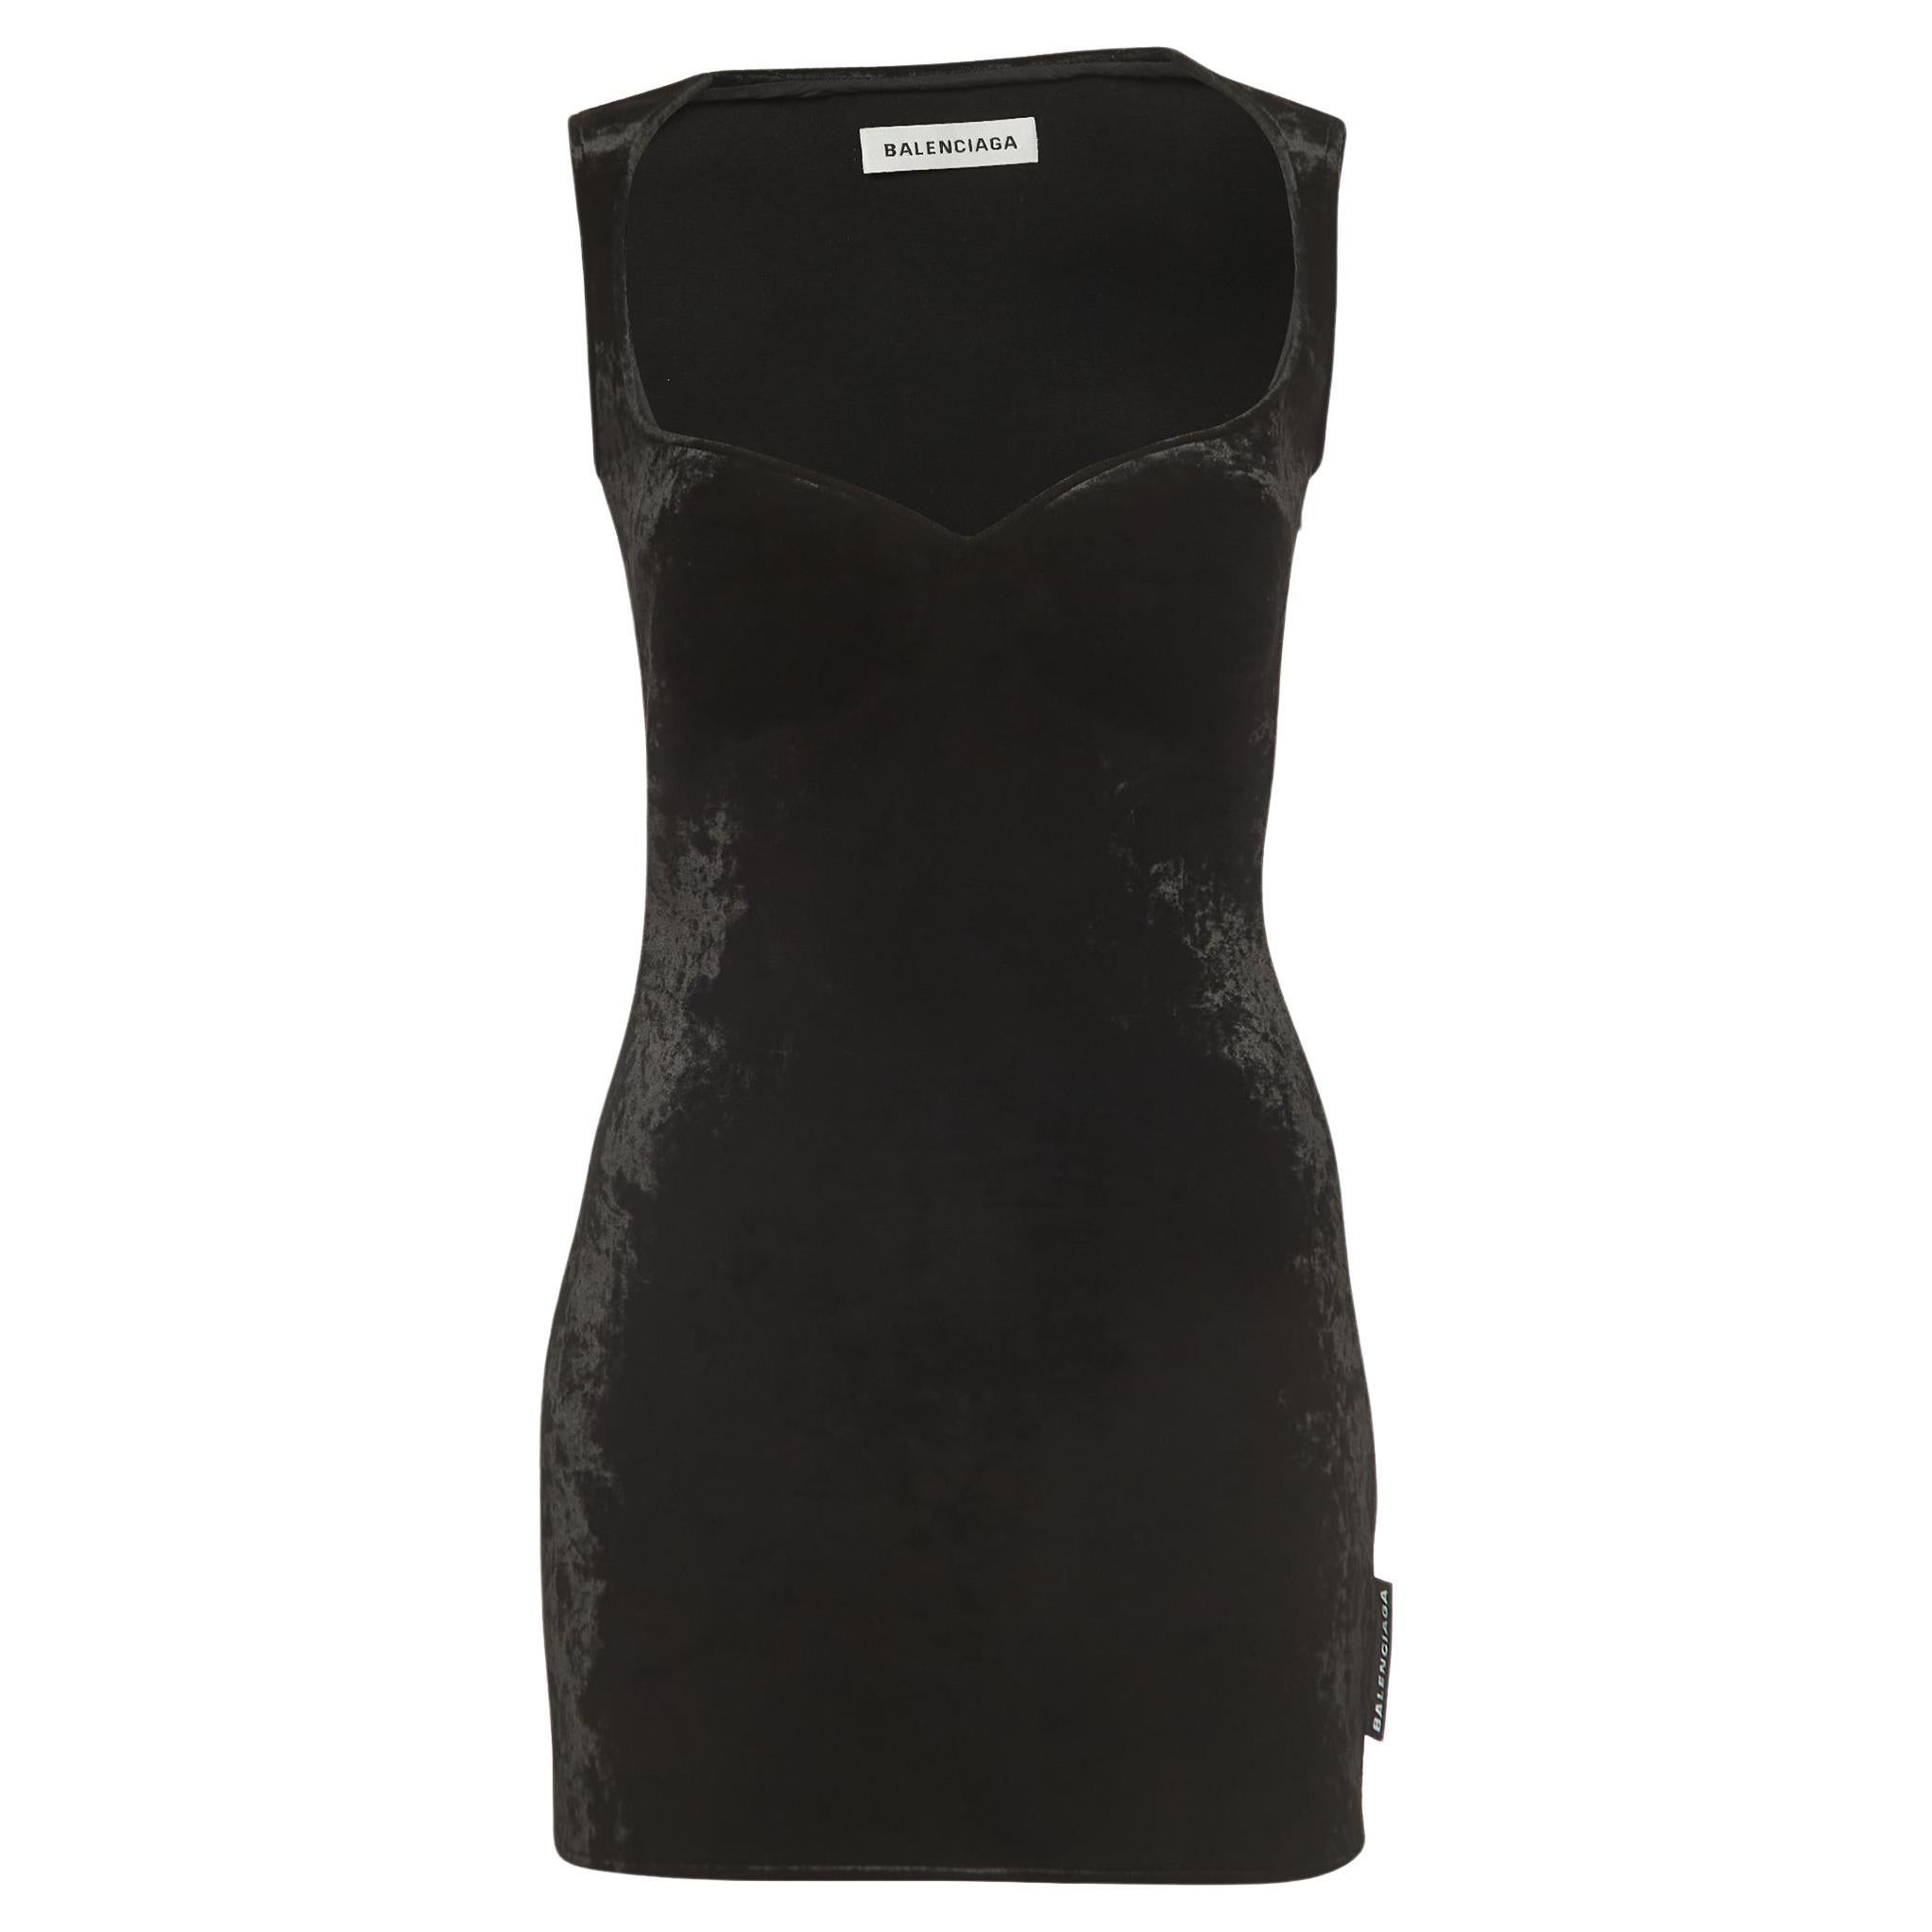 Balenciaga Black Velvet Sleeveless Mini Dress M